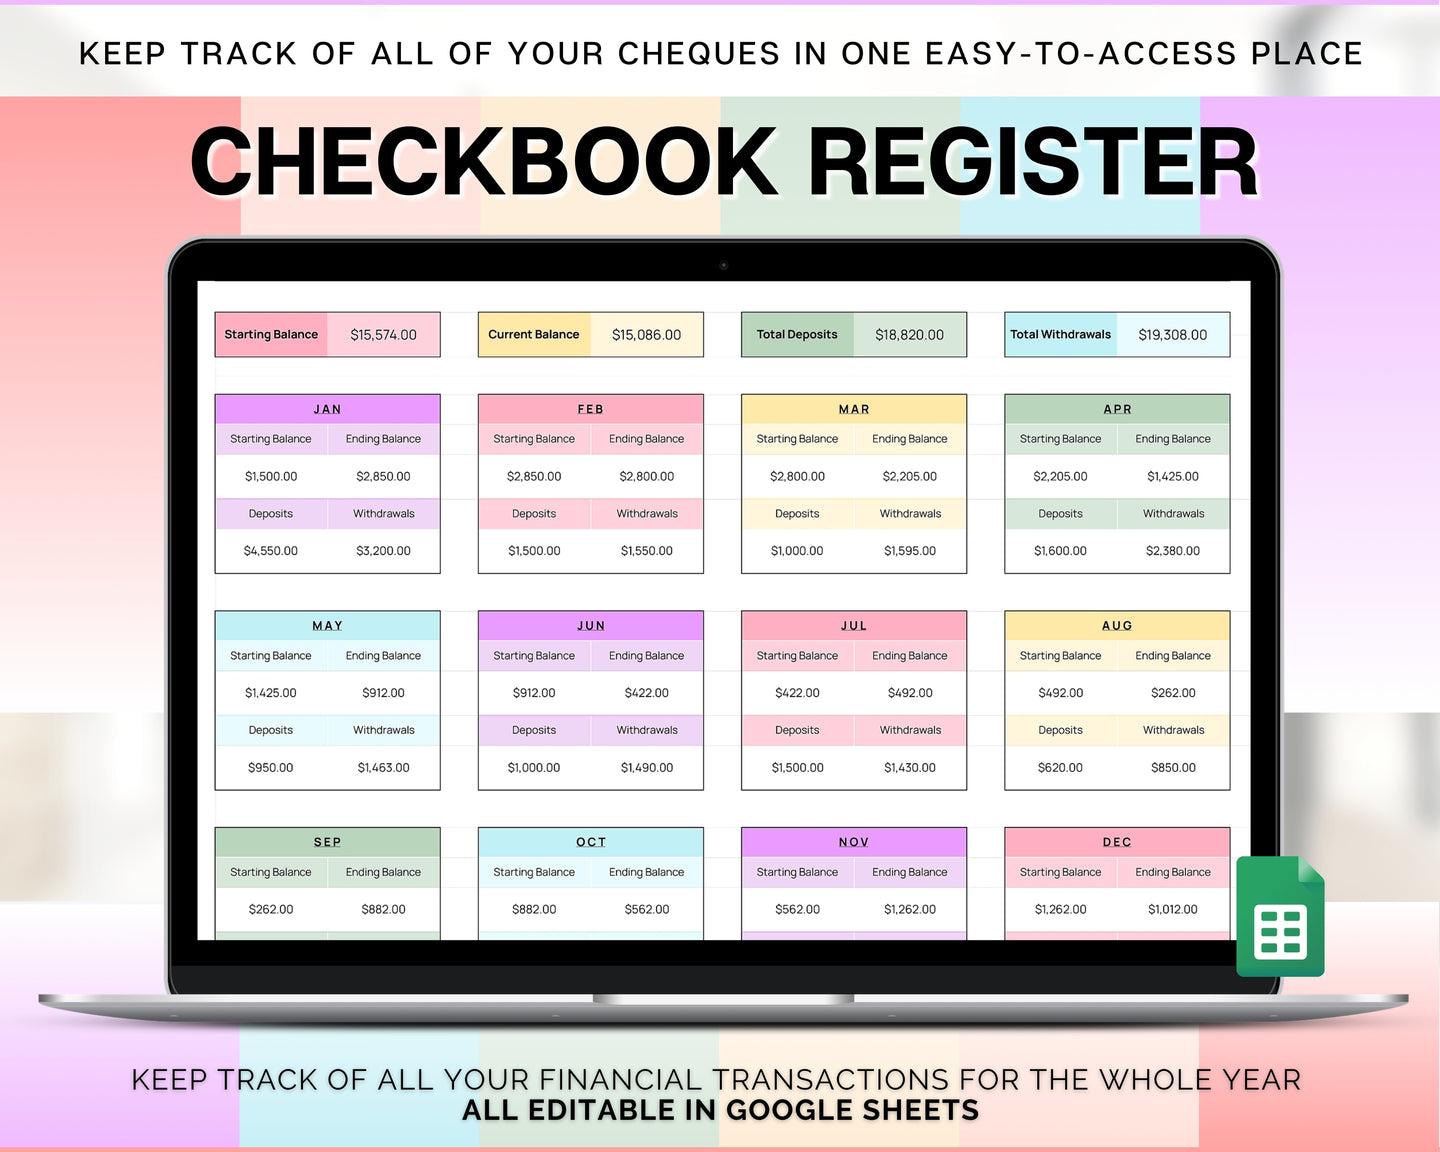 Editable Checkbook Register Spreadsheet | Google Sheets Check Register for Bill, Expenses, Credit Card, Income, Spending Tracker & Finance Template | Colorful